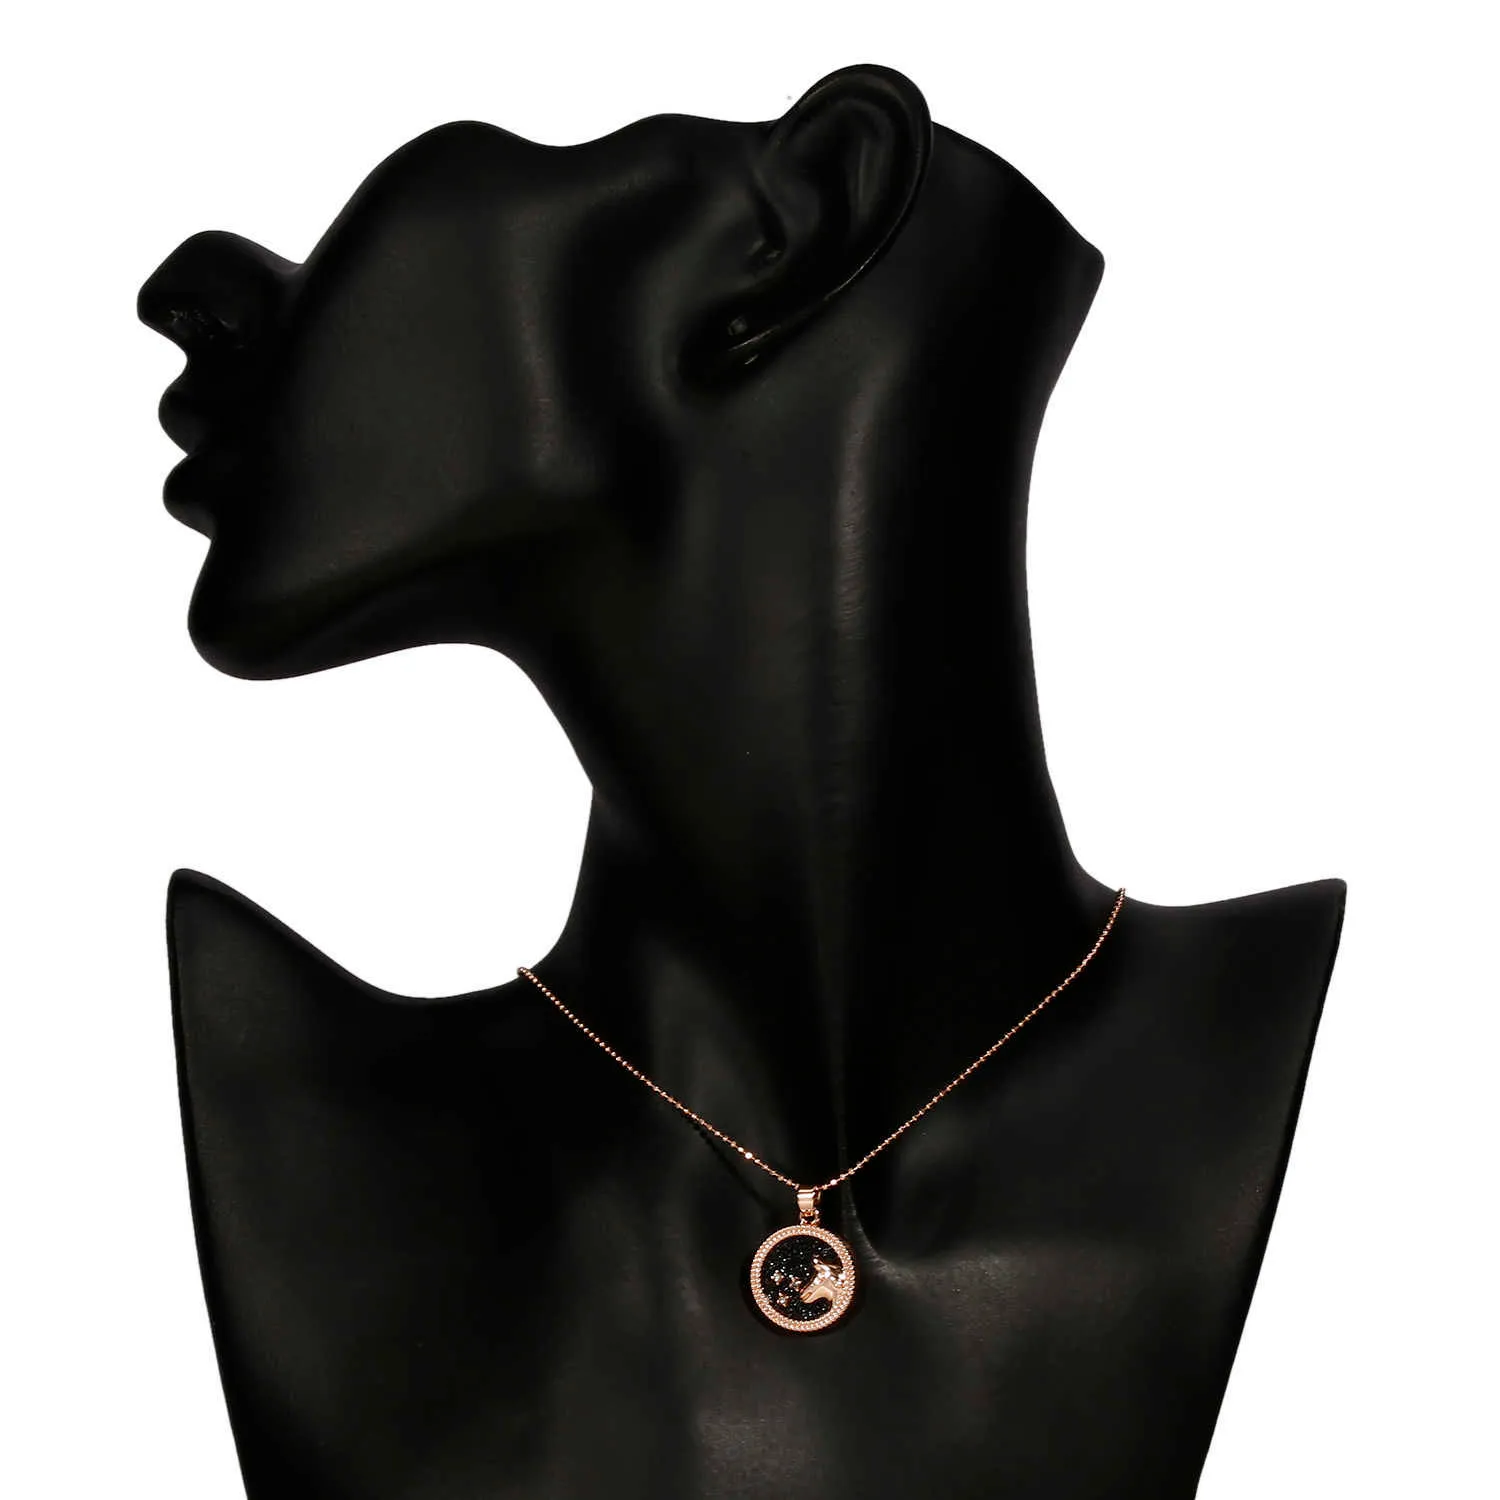 Zodiac moda mulheres assinar 12 colares dia noite rosa cor cor redonda pingente corujas amante jóias presente novo